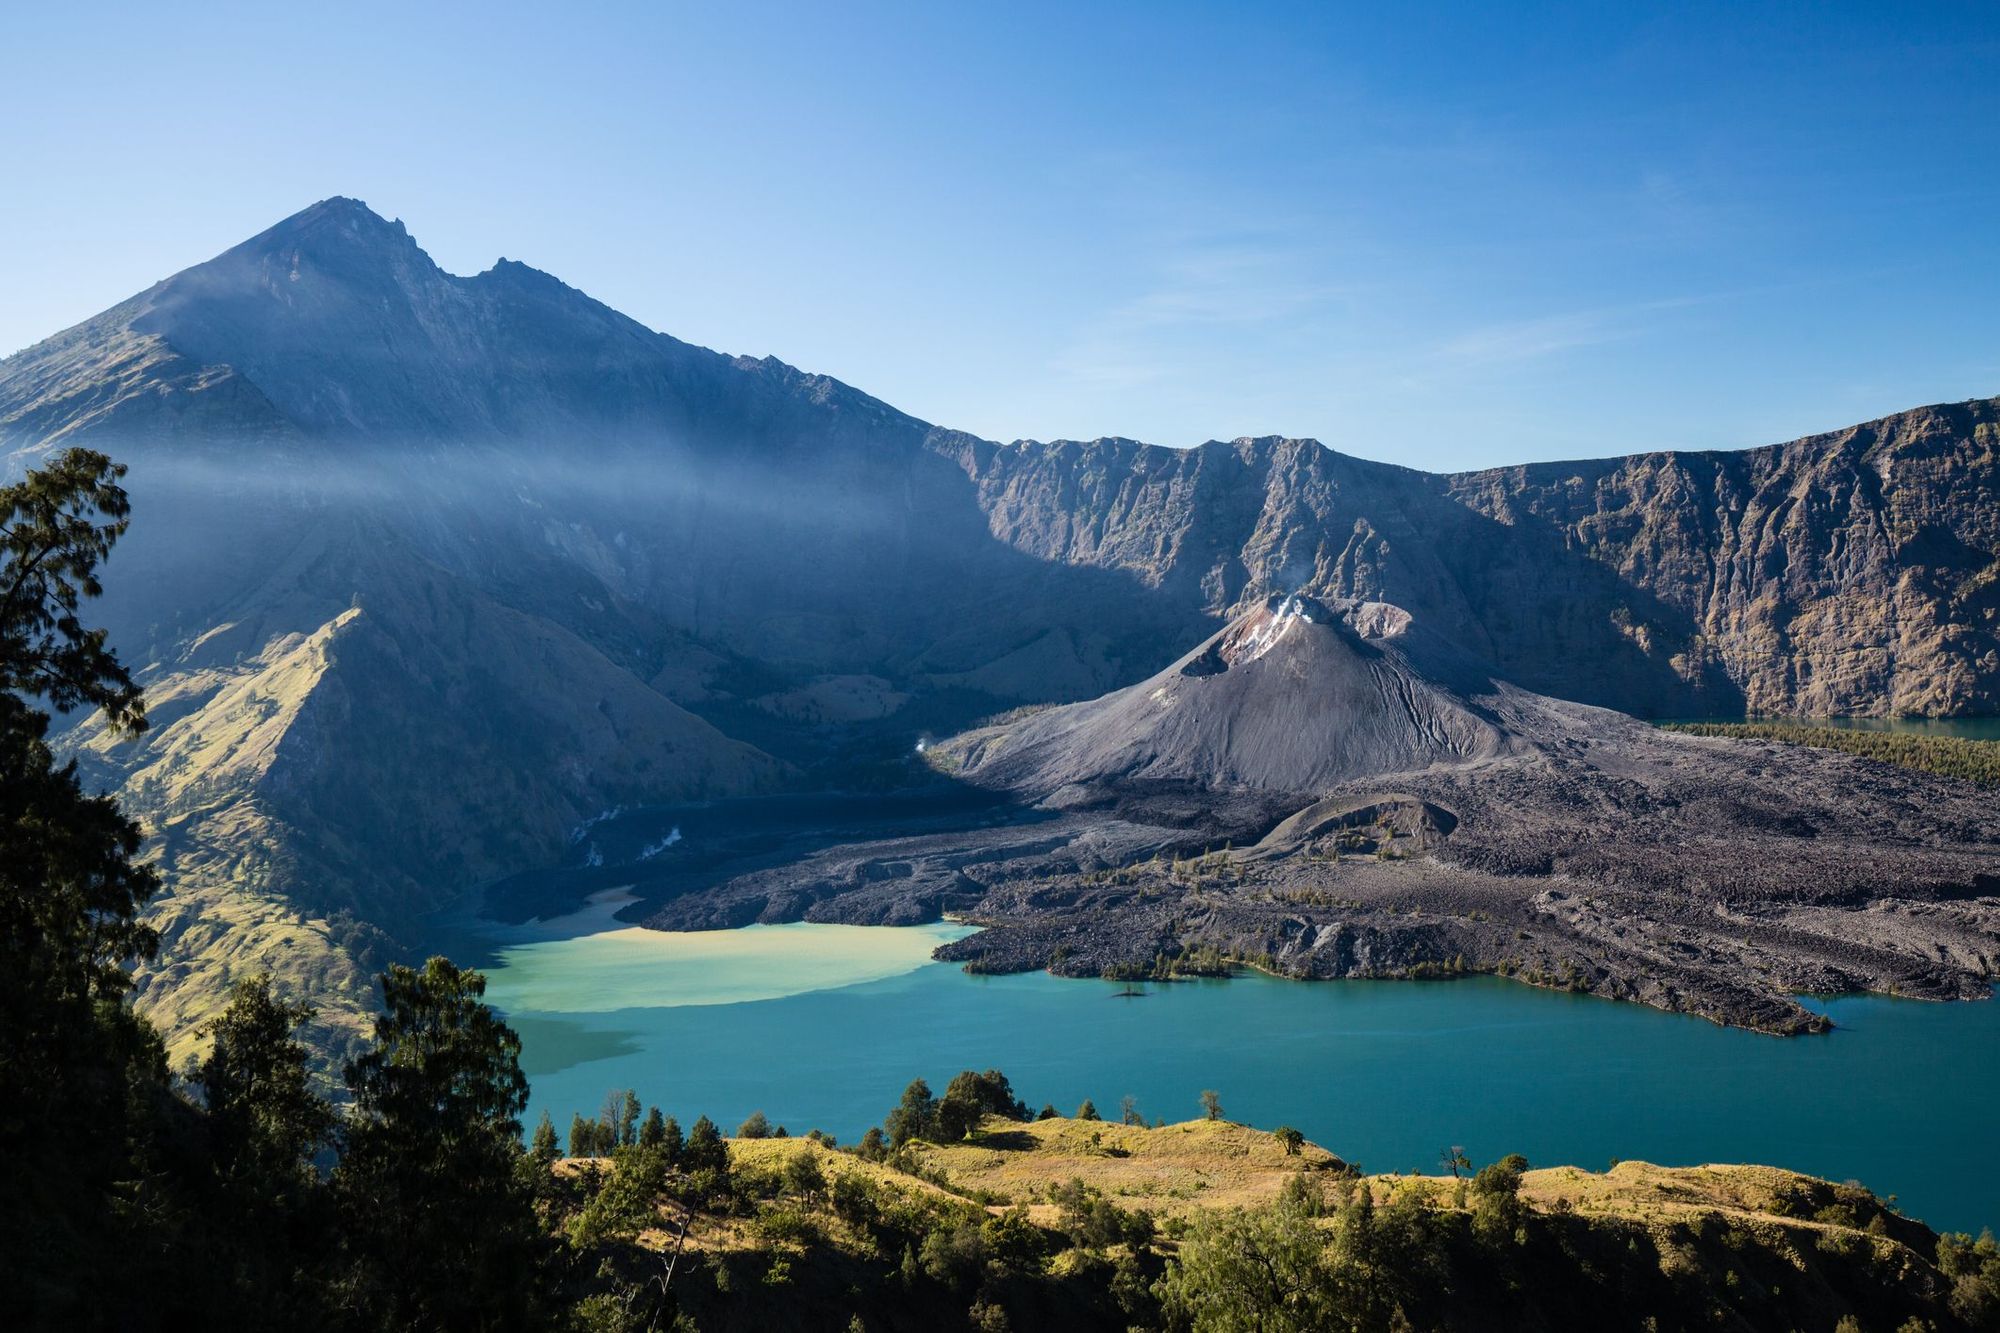 Segara Anak Lake on Mount Rinjani, a volcano in Lombok, Indonesia